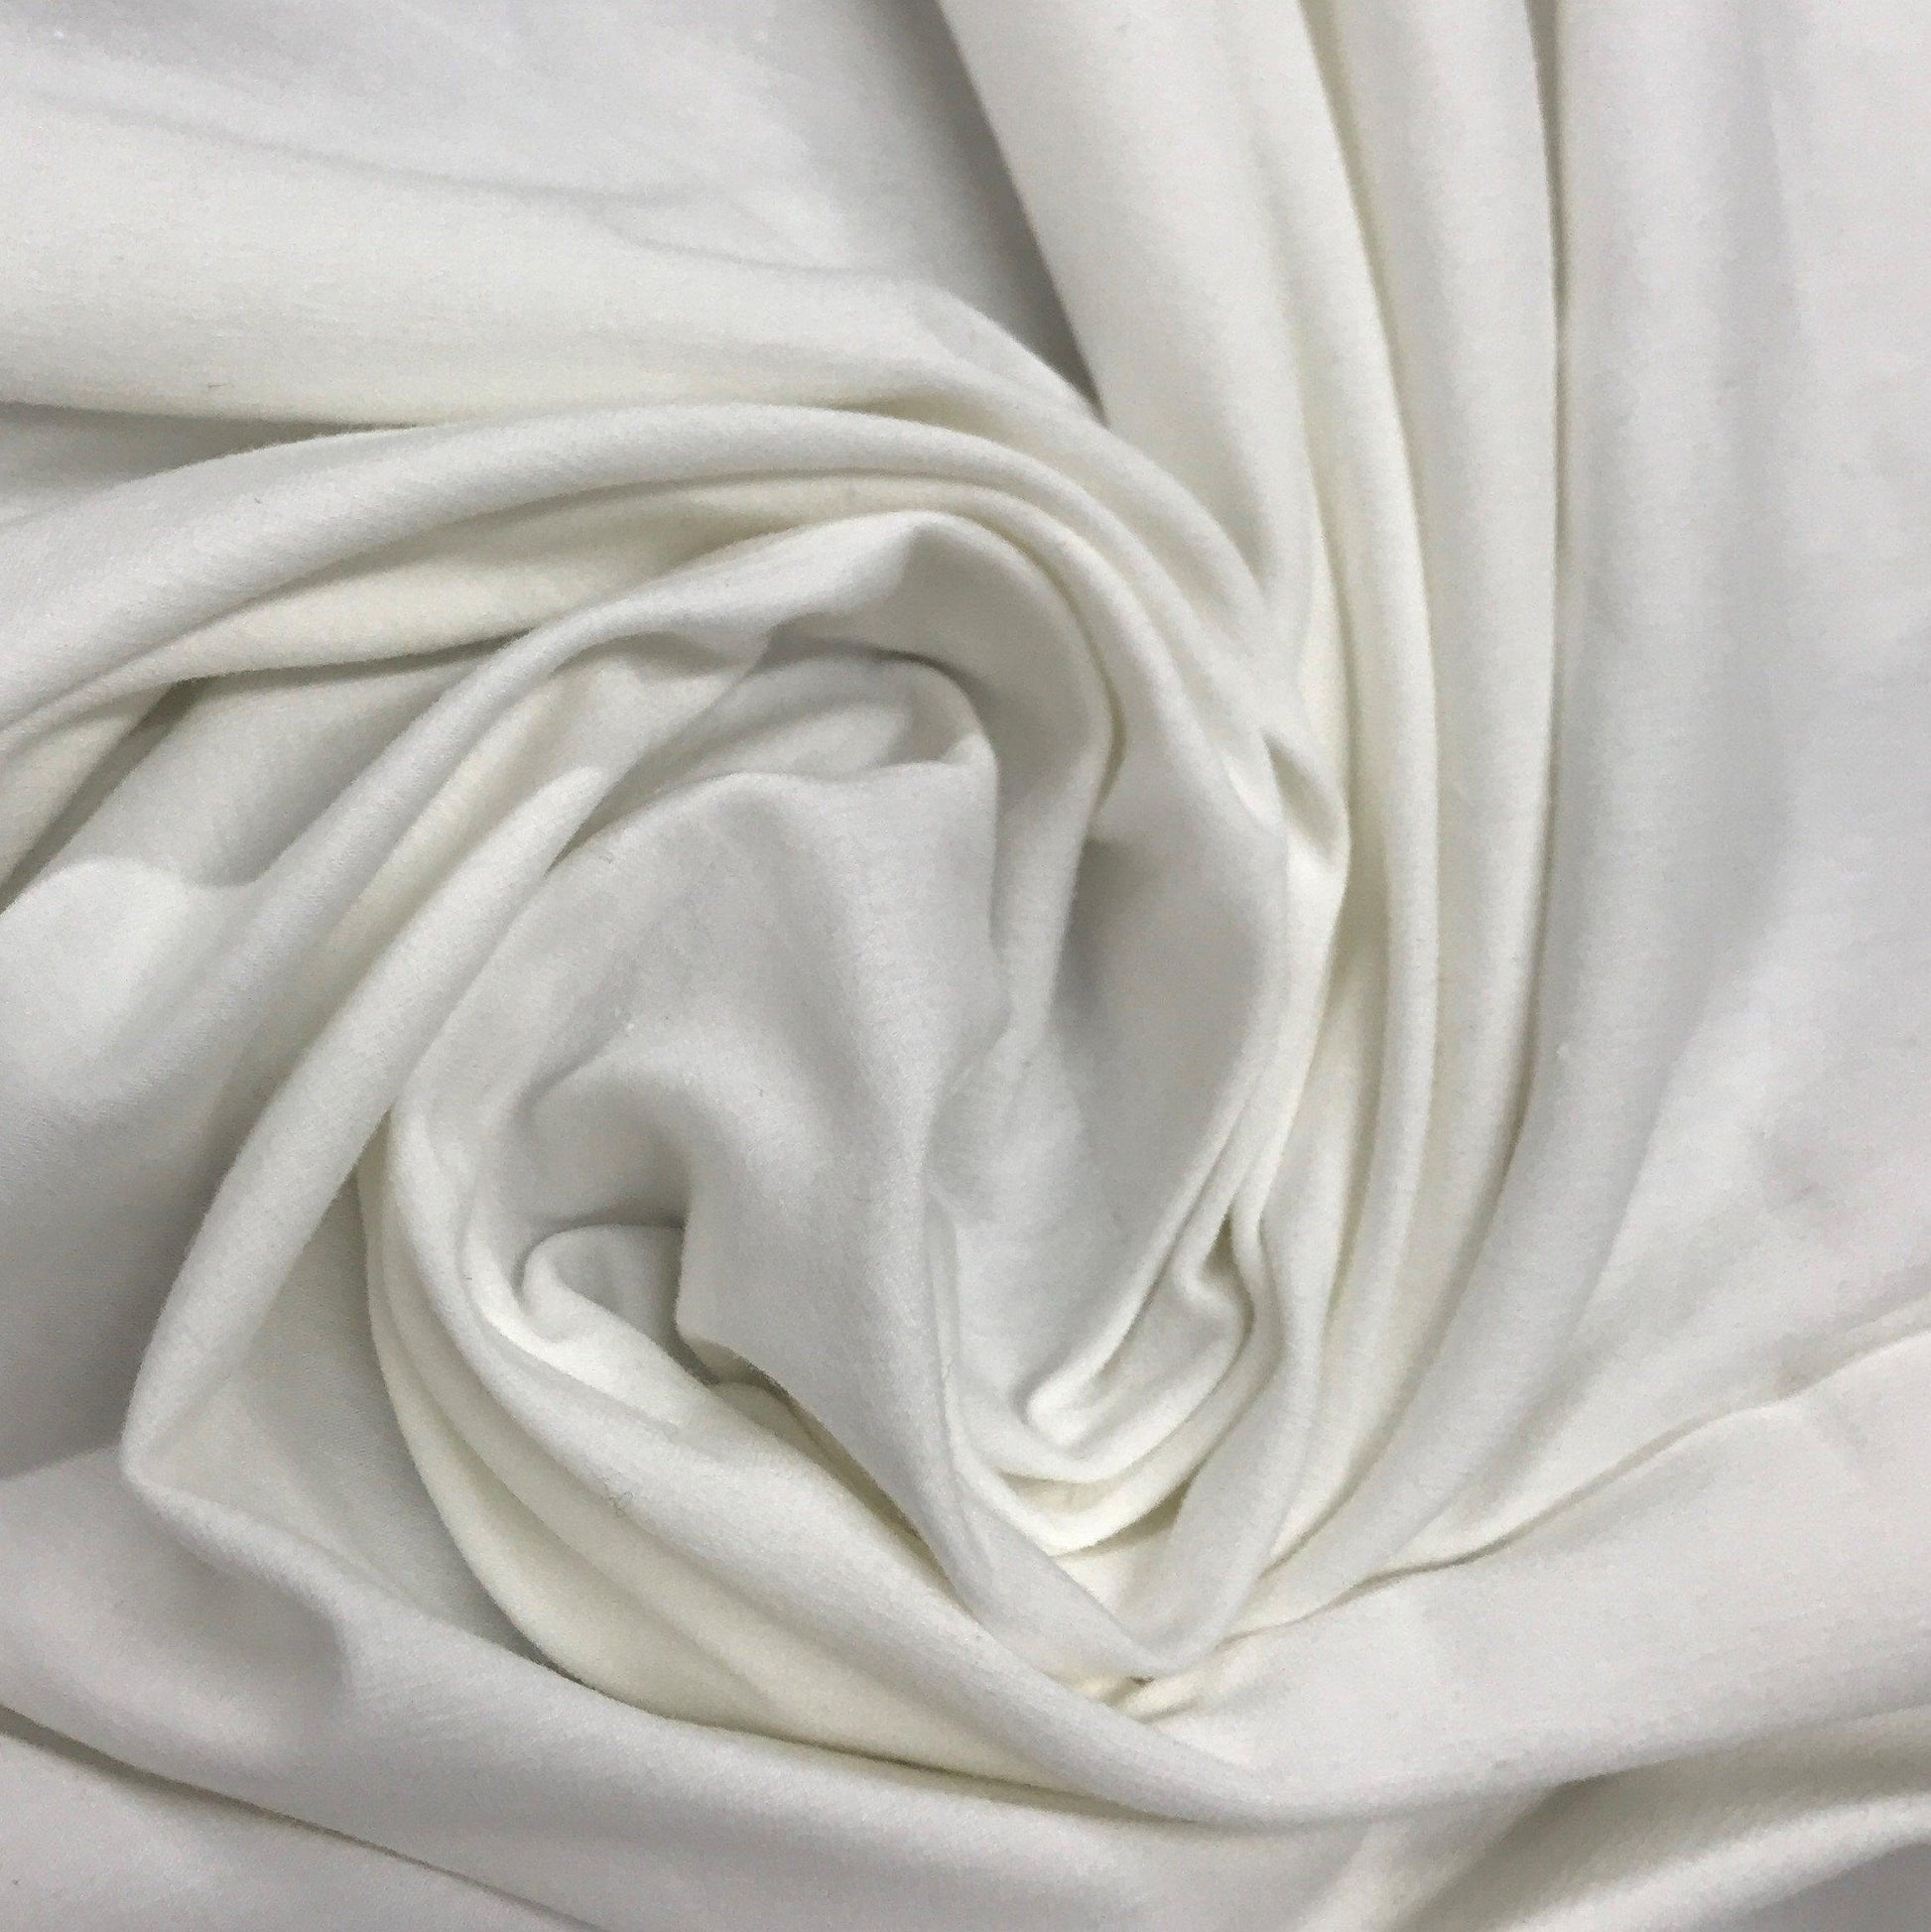 Off-White Organic Cotton/Spandex Jersey Fabric - $8.65/yd - Rolls - Nature's Fabrics